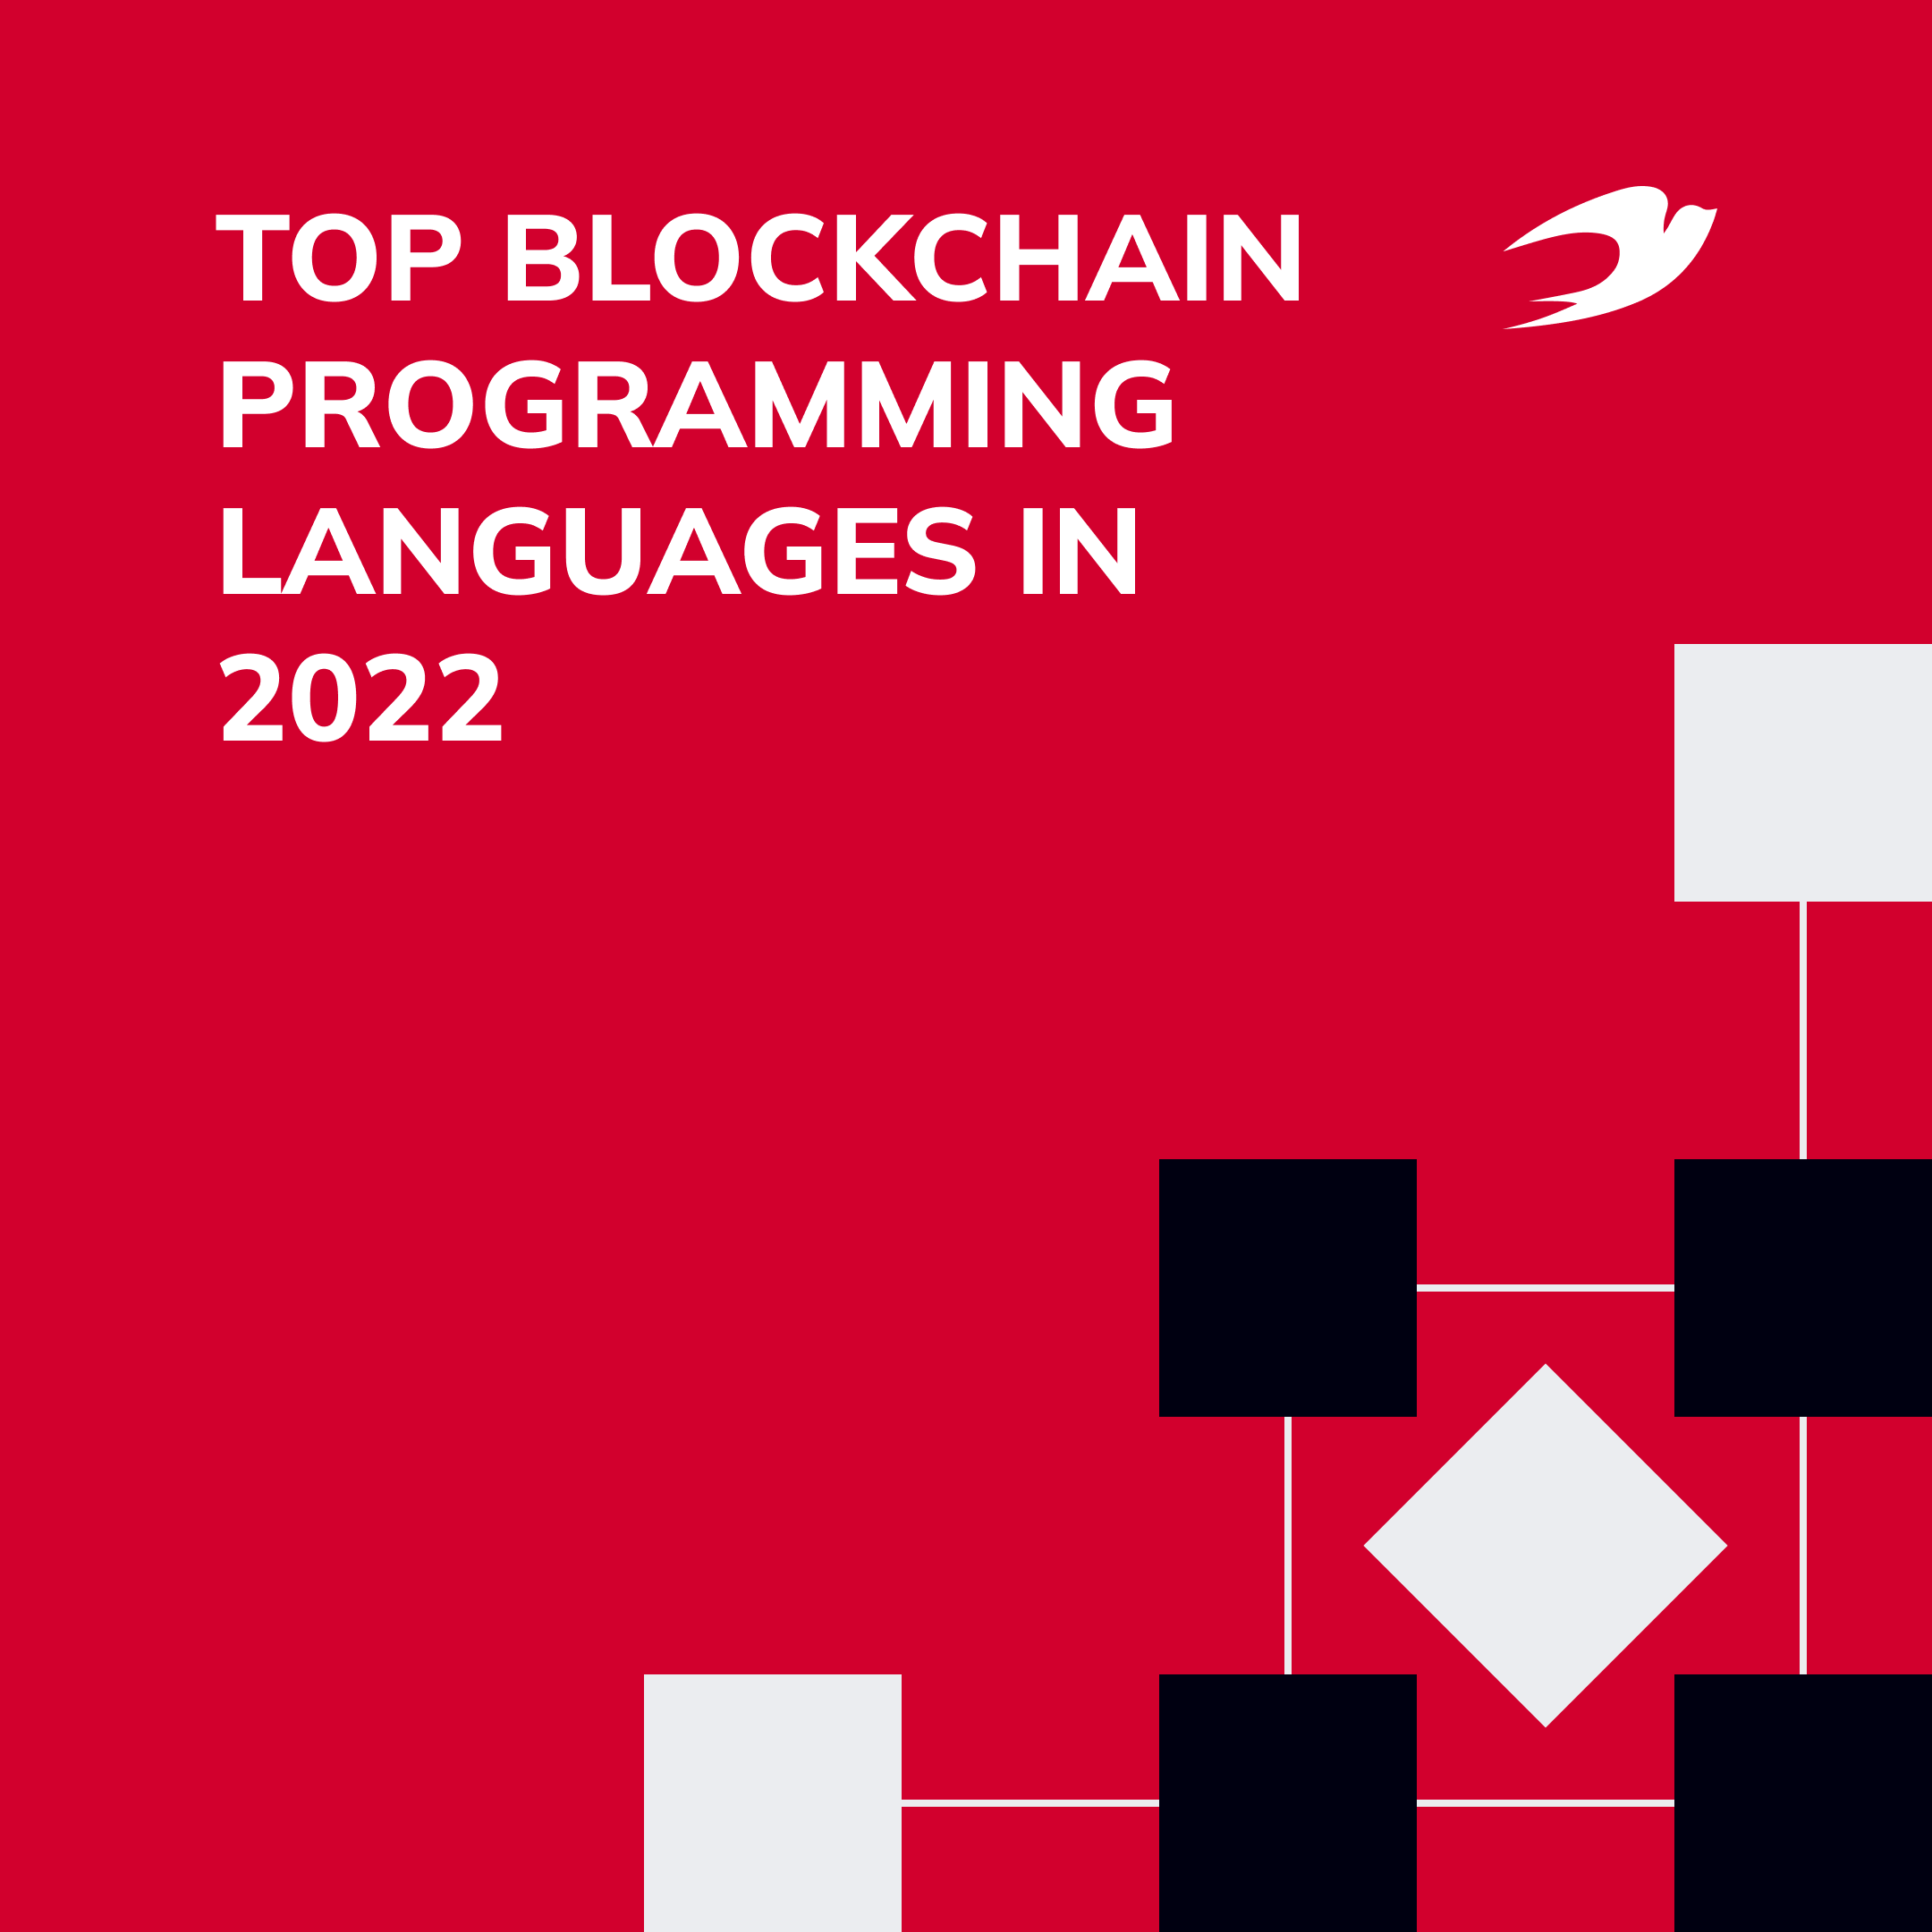 Top Blockchain Programming Languages in 2022